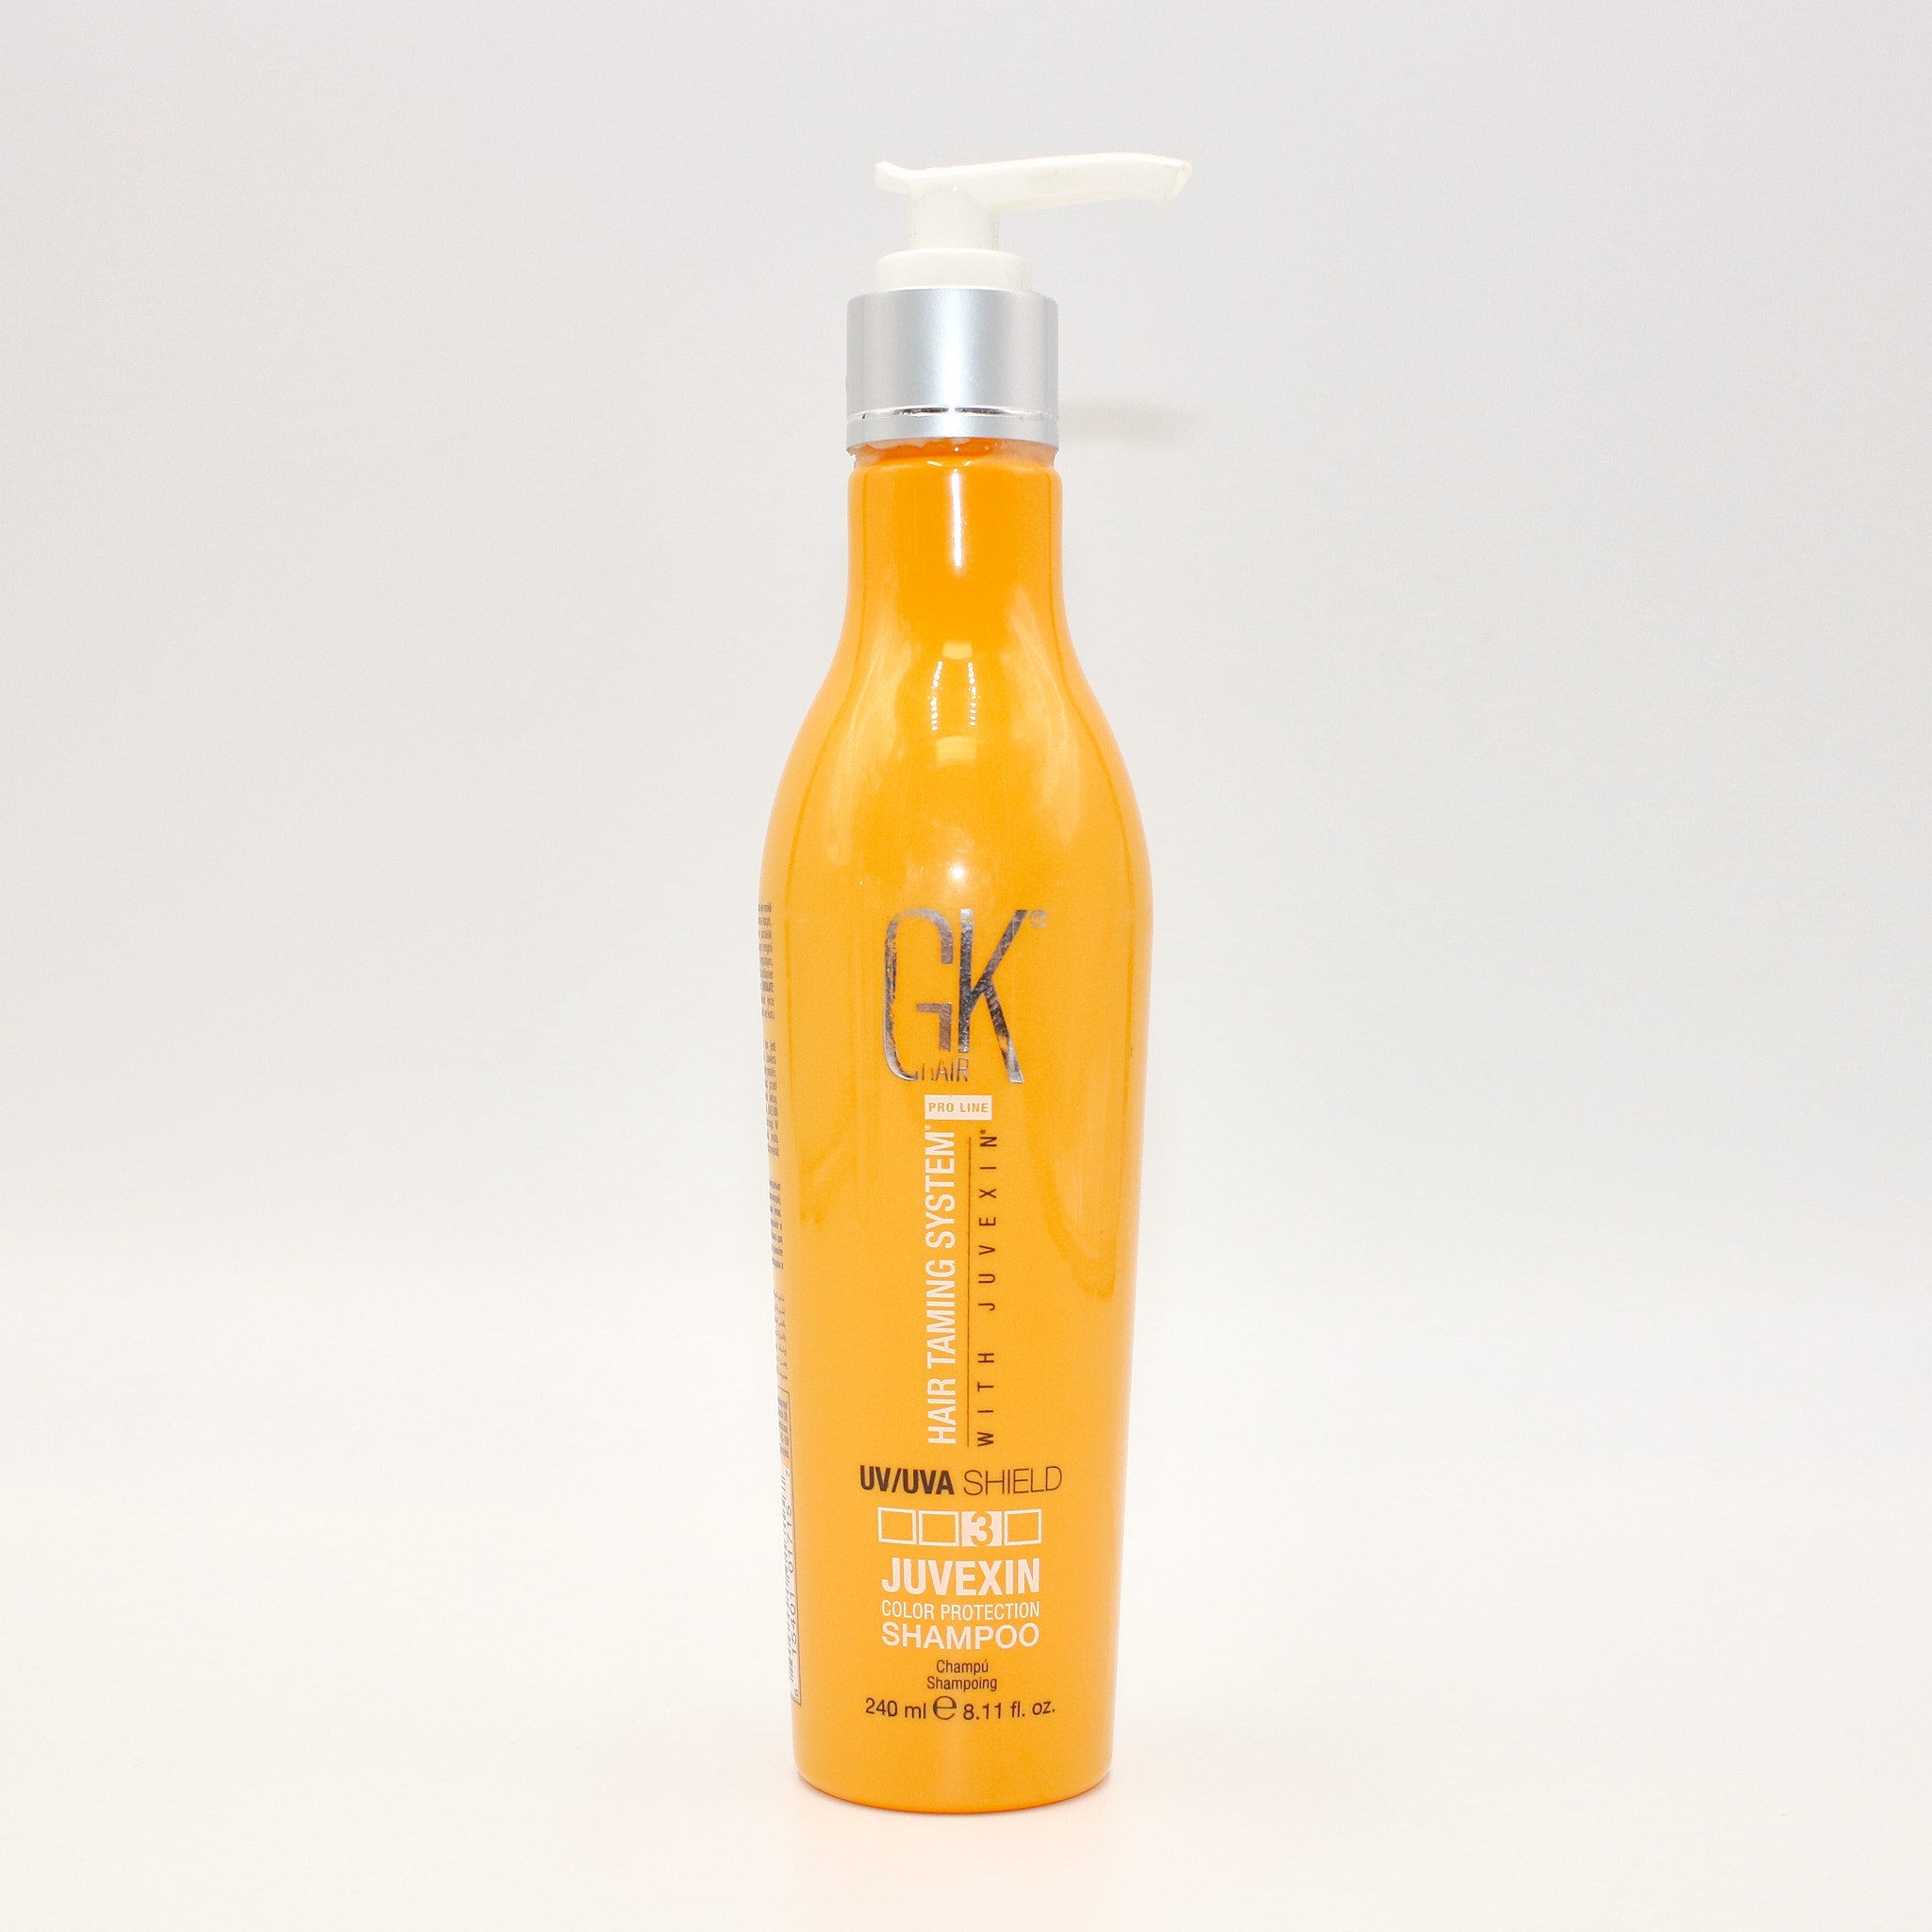 GLOBAL KERATIN Hair Juvexin Color Protection Shampoo 8.11 oz